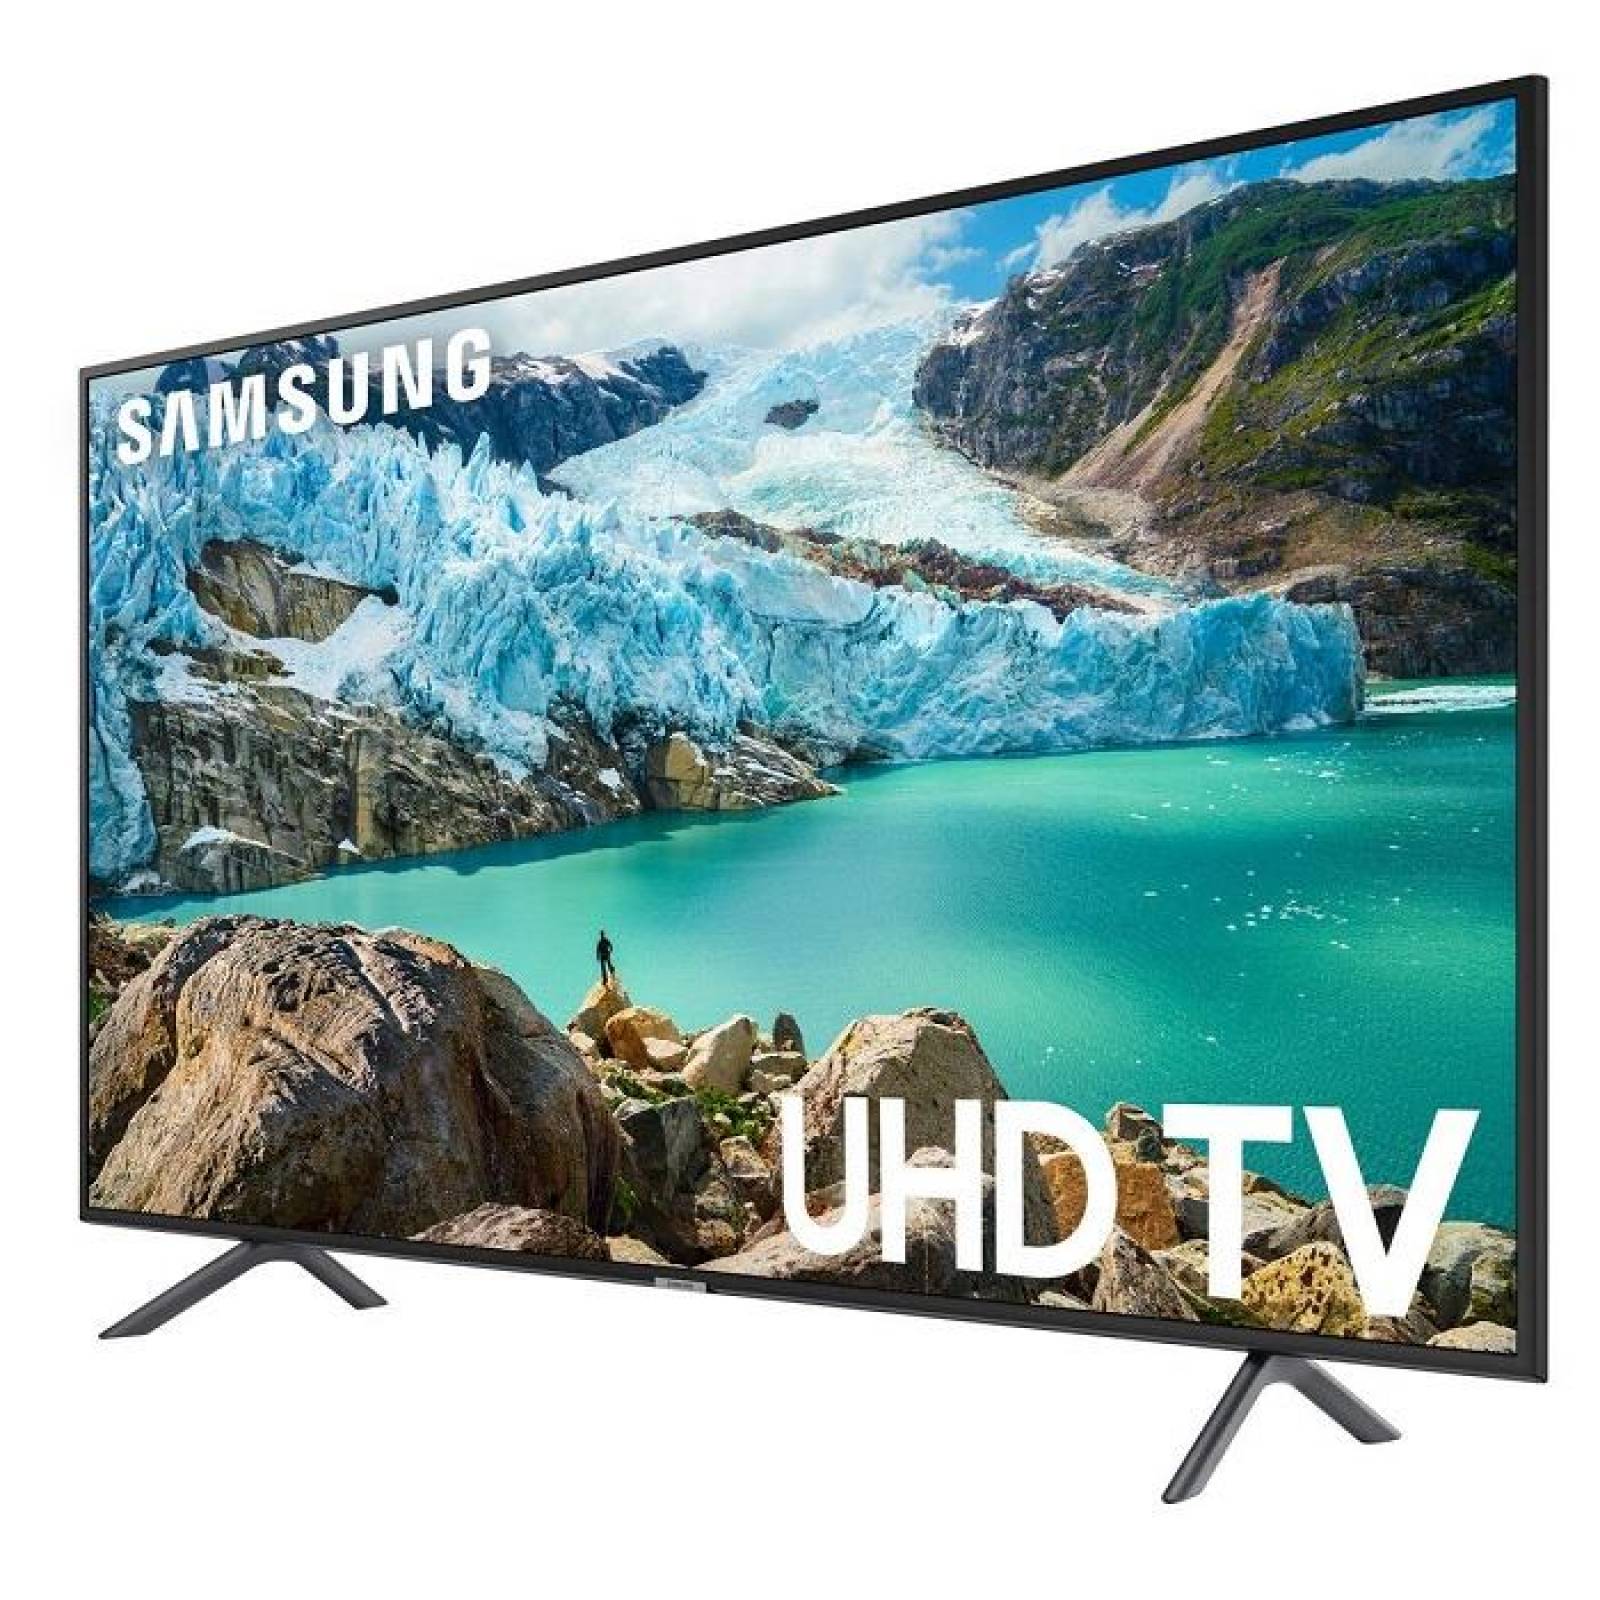 Smart TV 50 Samsung UHD 4K PureColor UN50RU7100